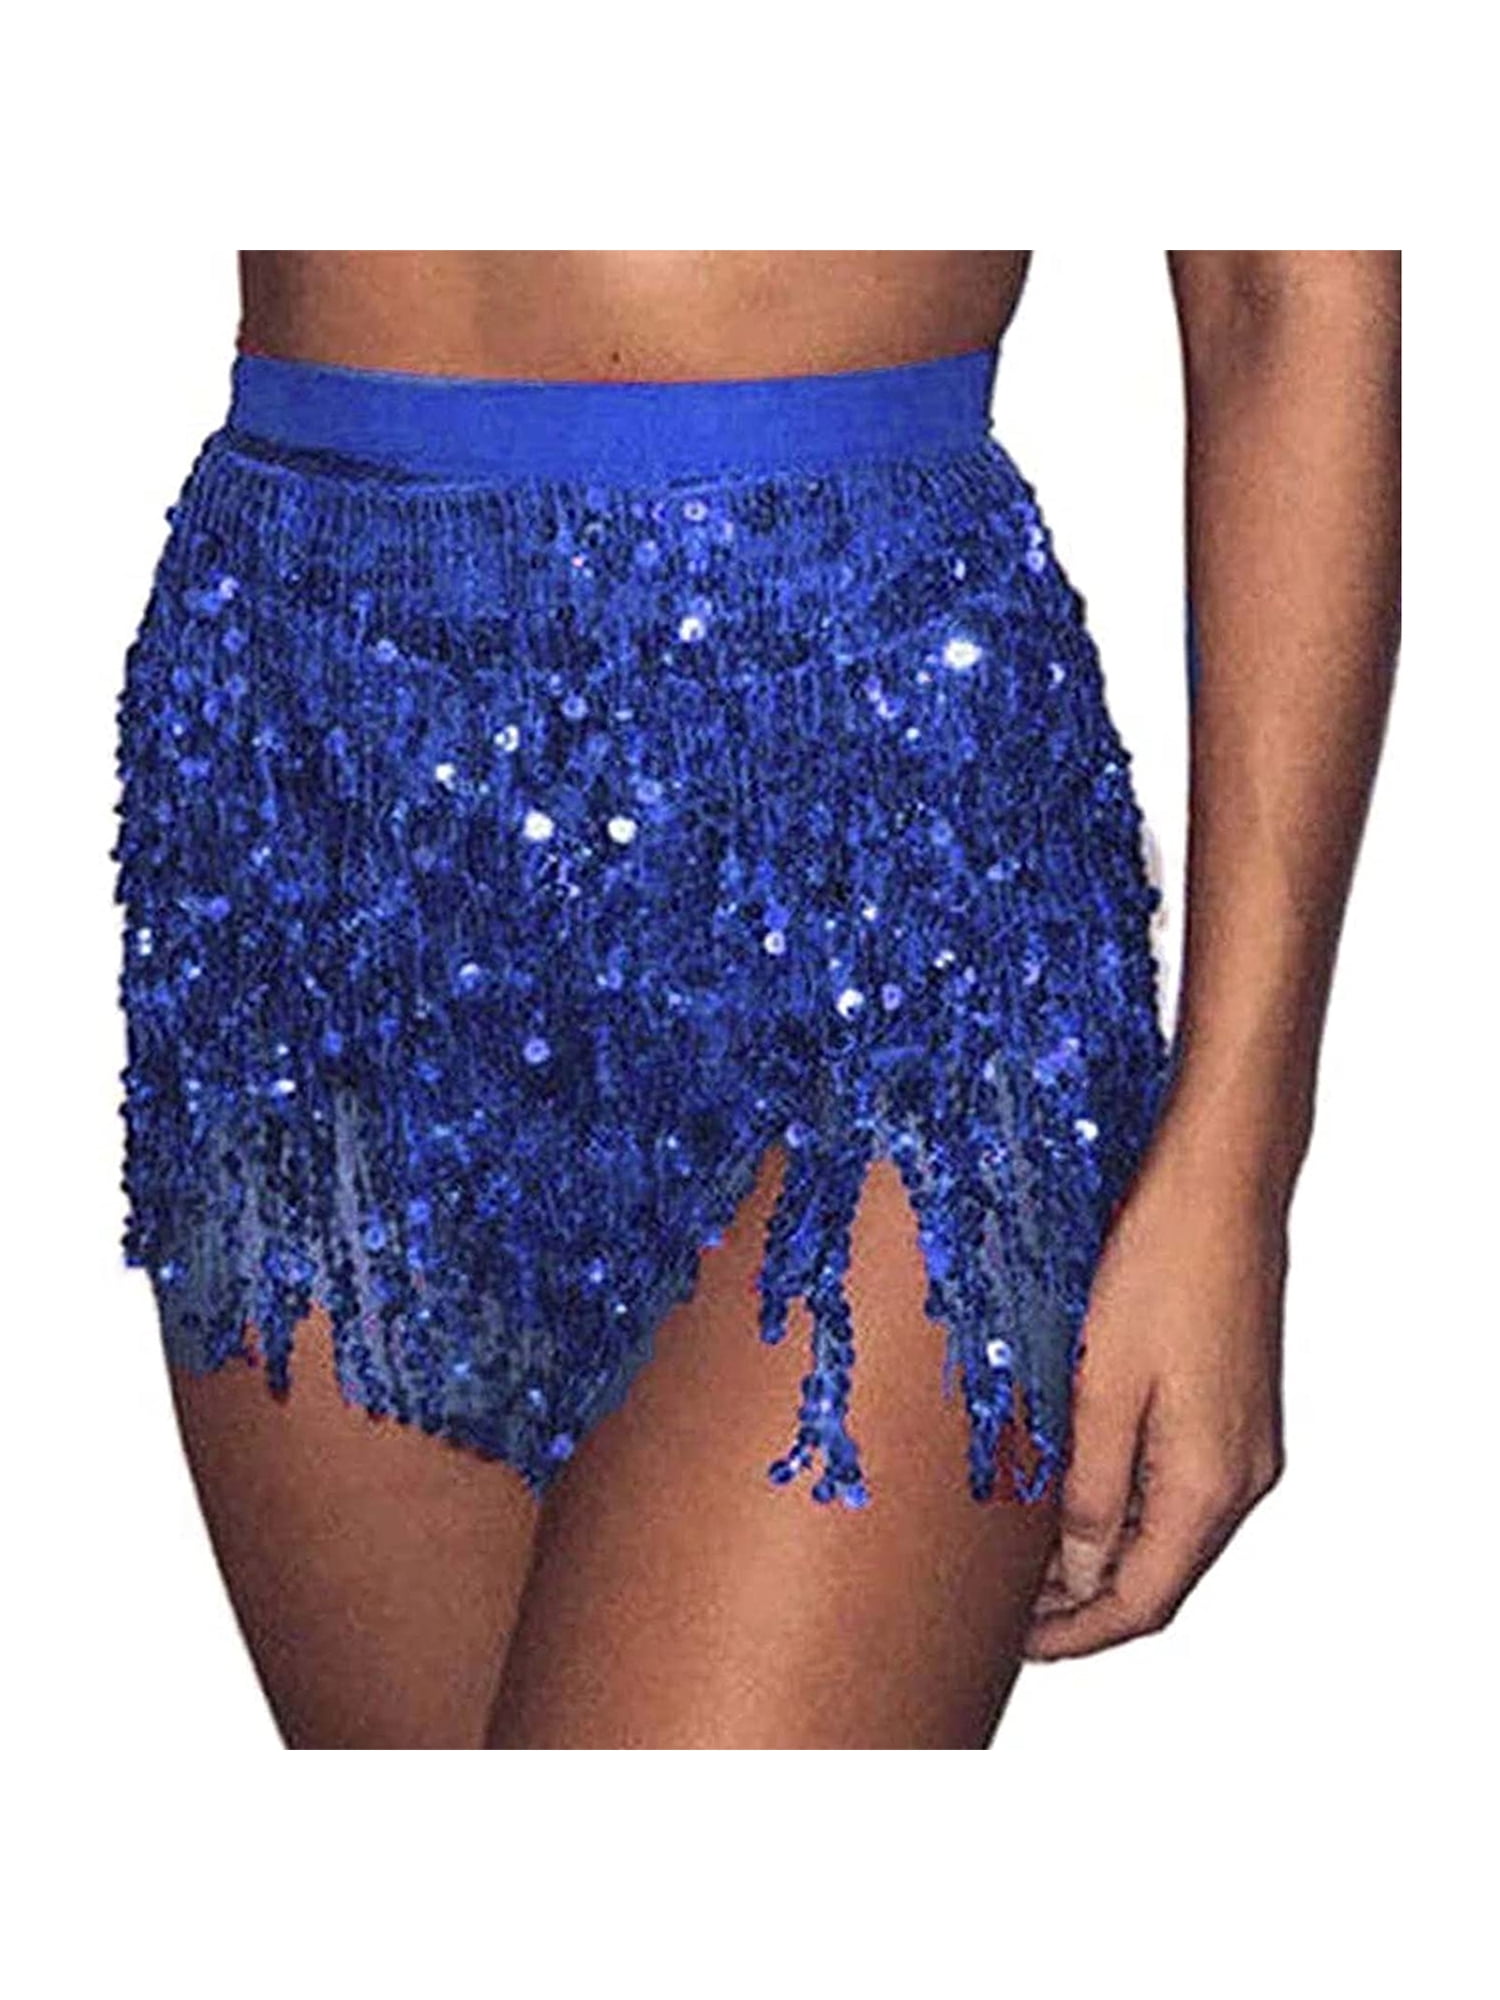 Beach & Swimwear Dance Squad Set: Multi-Color Sequin Halter Crop Top & Mini Skirt Club Festival Fashion Outfit for Rave